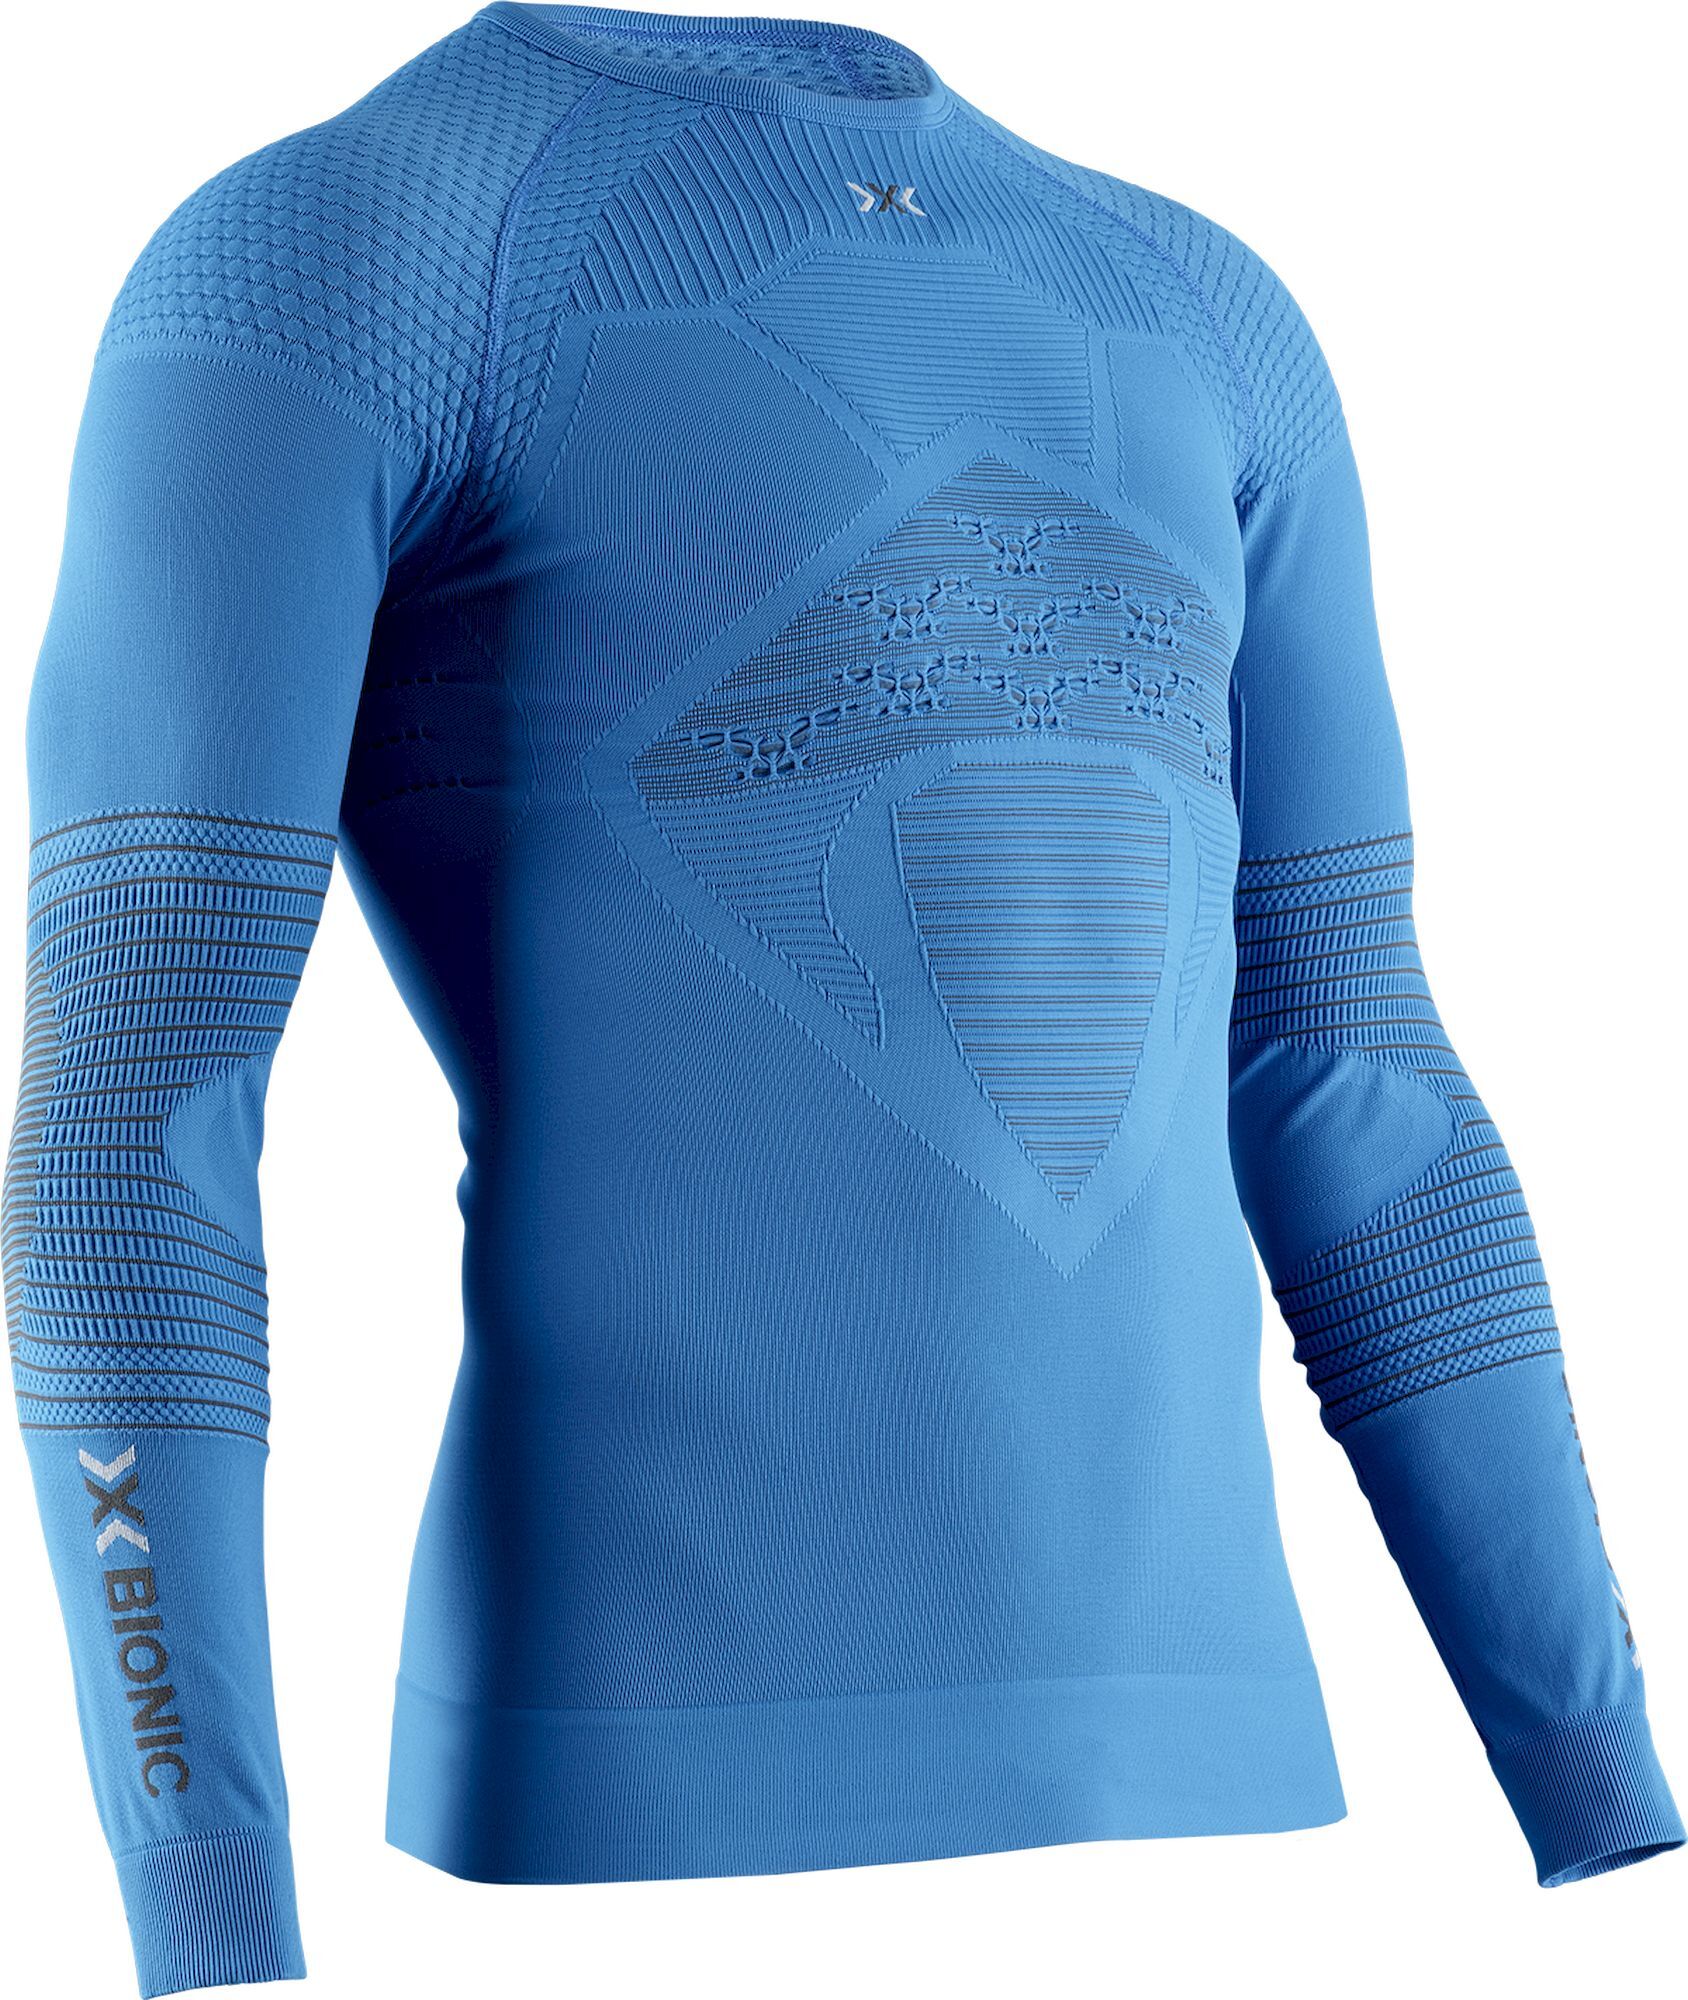 X-Bionic Energizer 4.0 Shirt Long Sleeve - Underkläder syntet - Herr